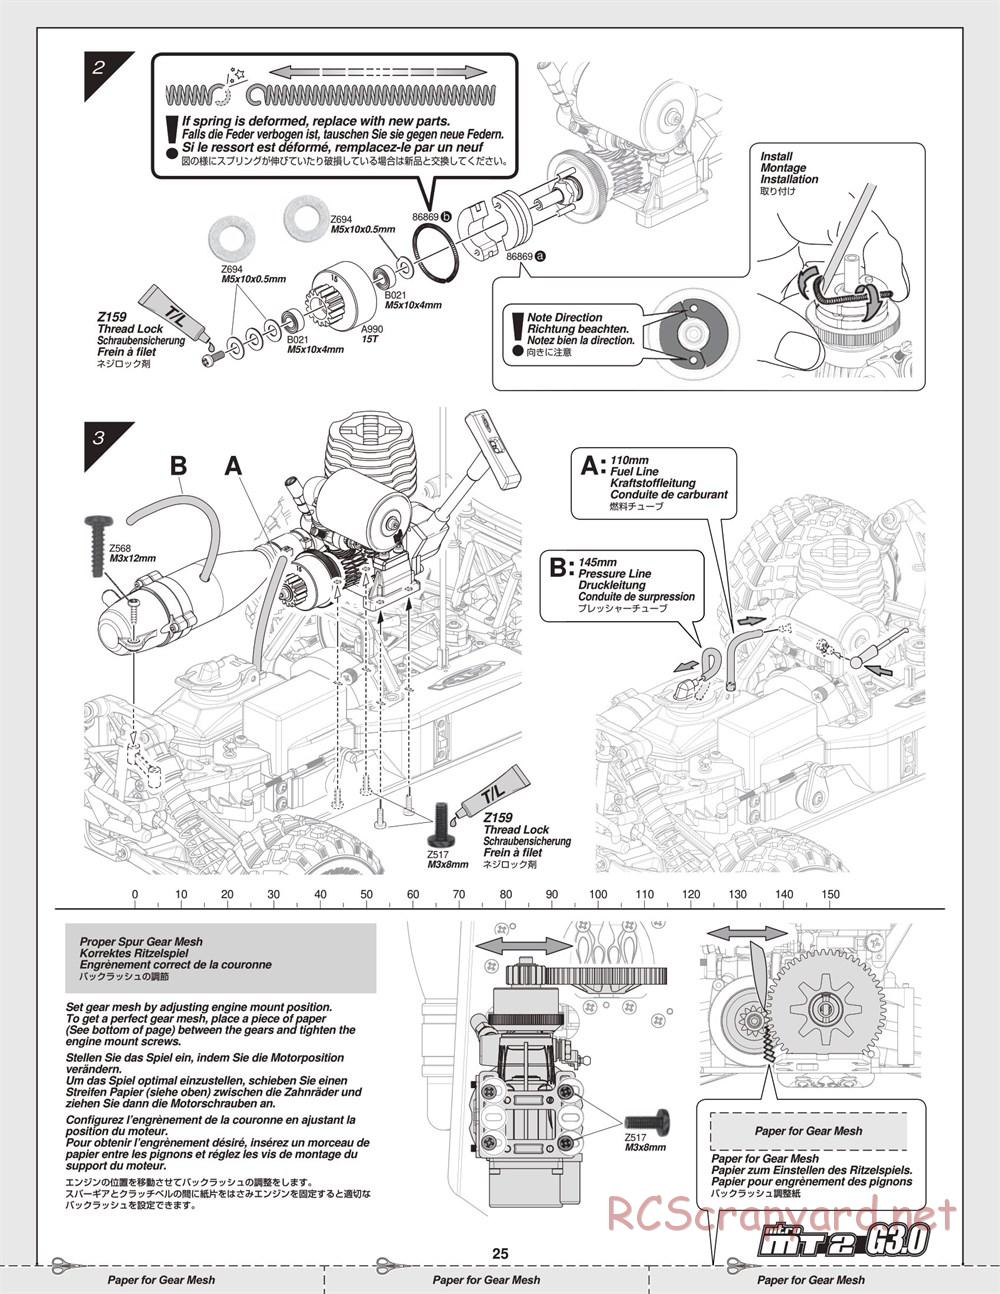 HPI - Nitro MT2 G3.0 - Manual - Page 25